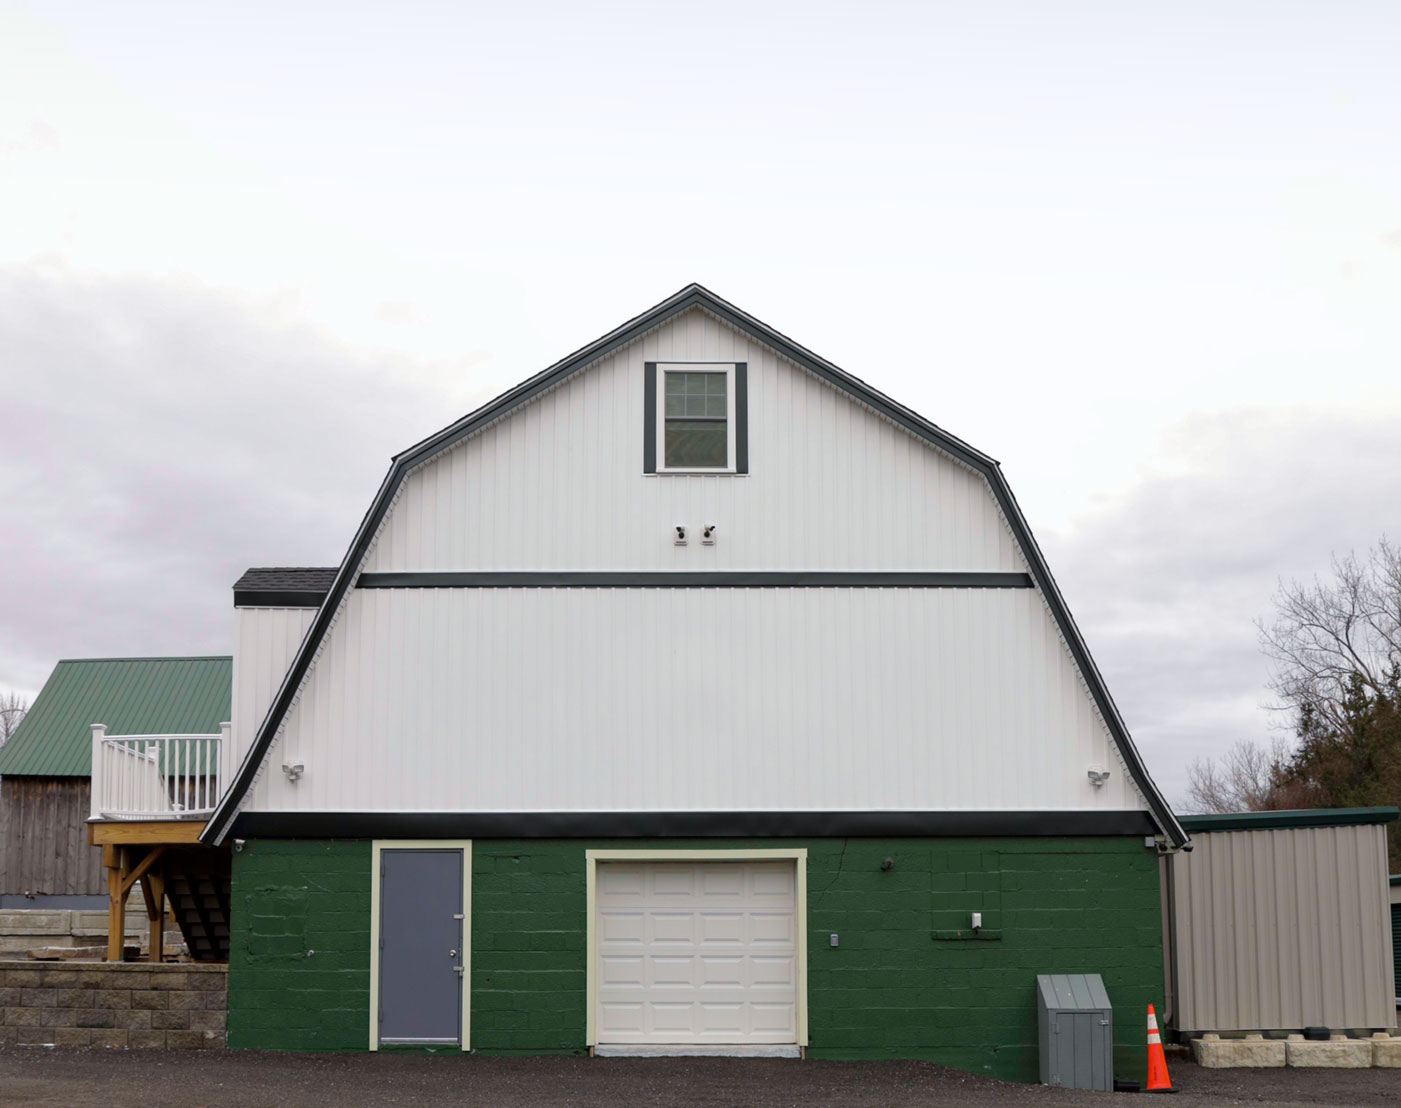 Self-Storage Barn of Morris, LLC